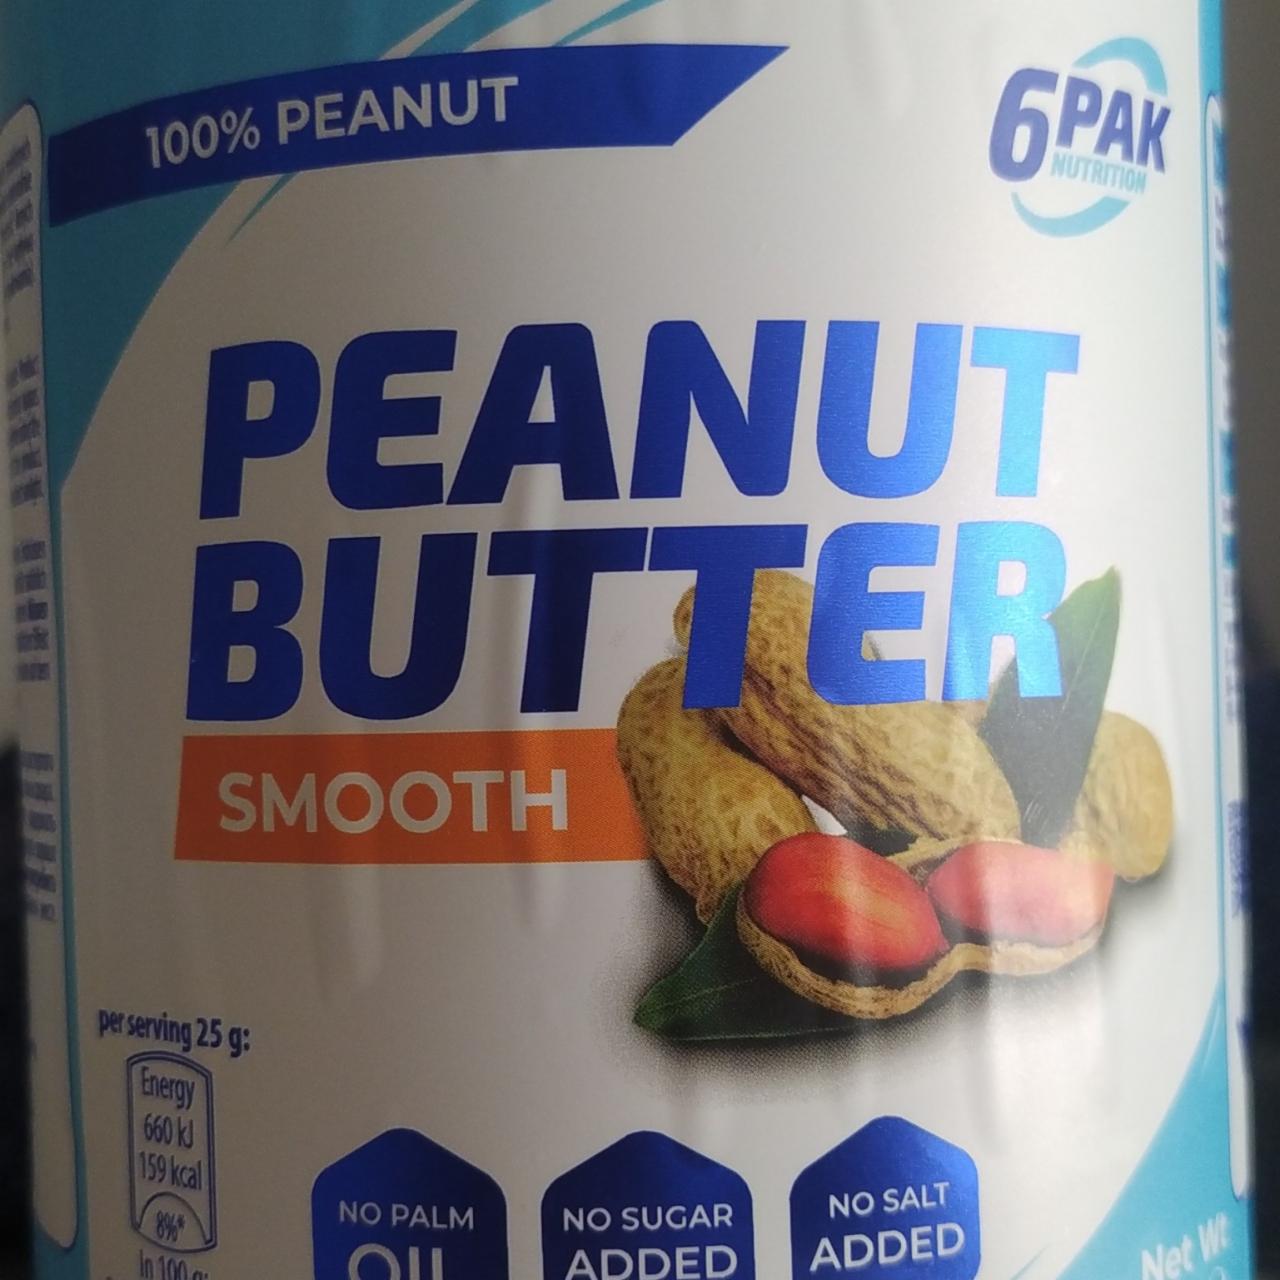 Zdjęcia - 6PAK Nutrition Peanut Butter smooth